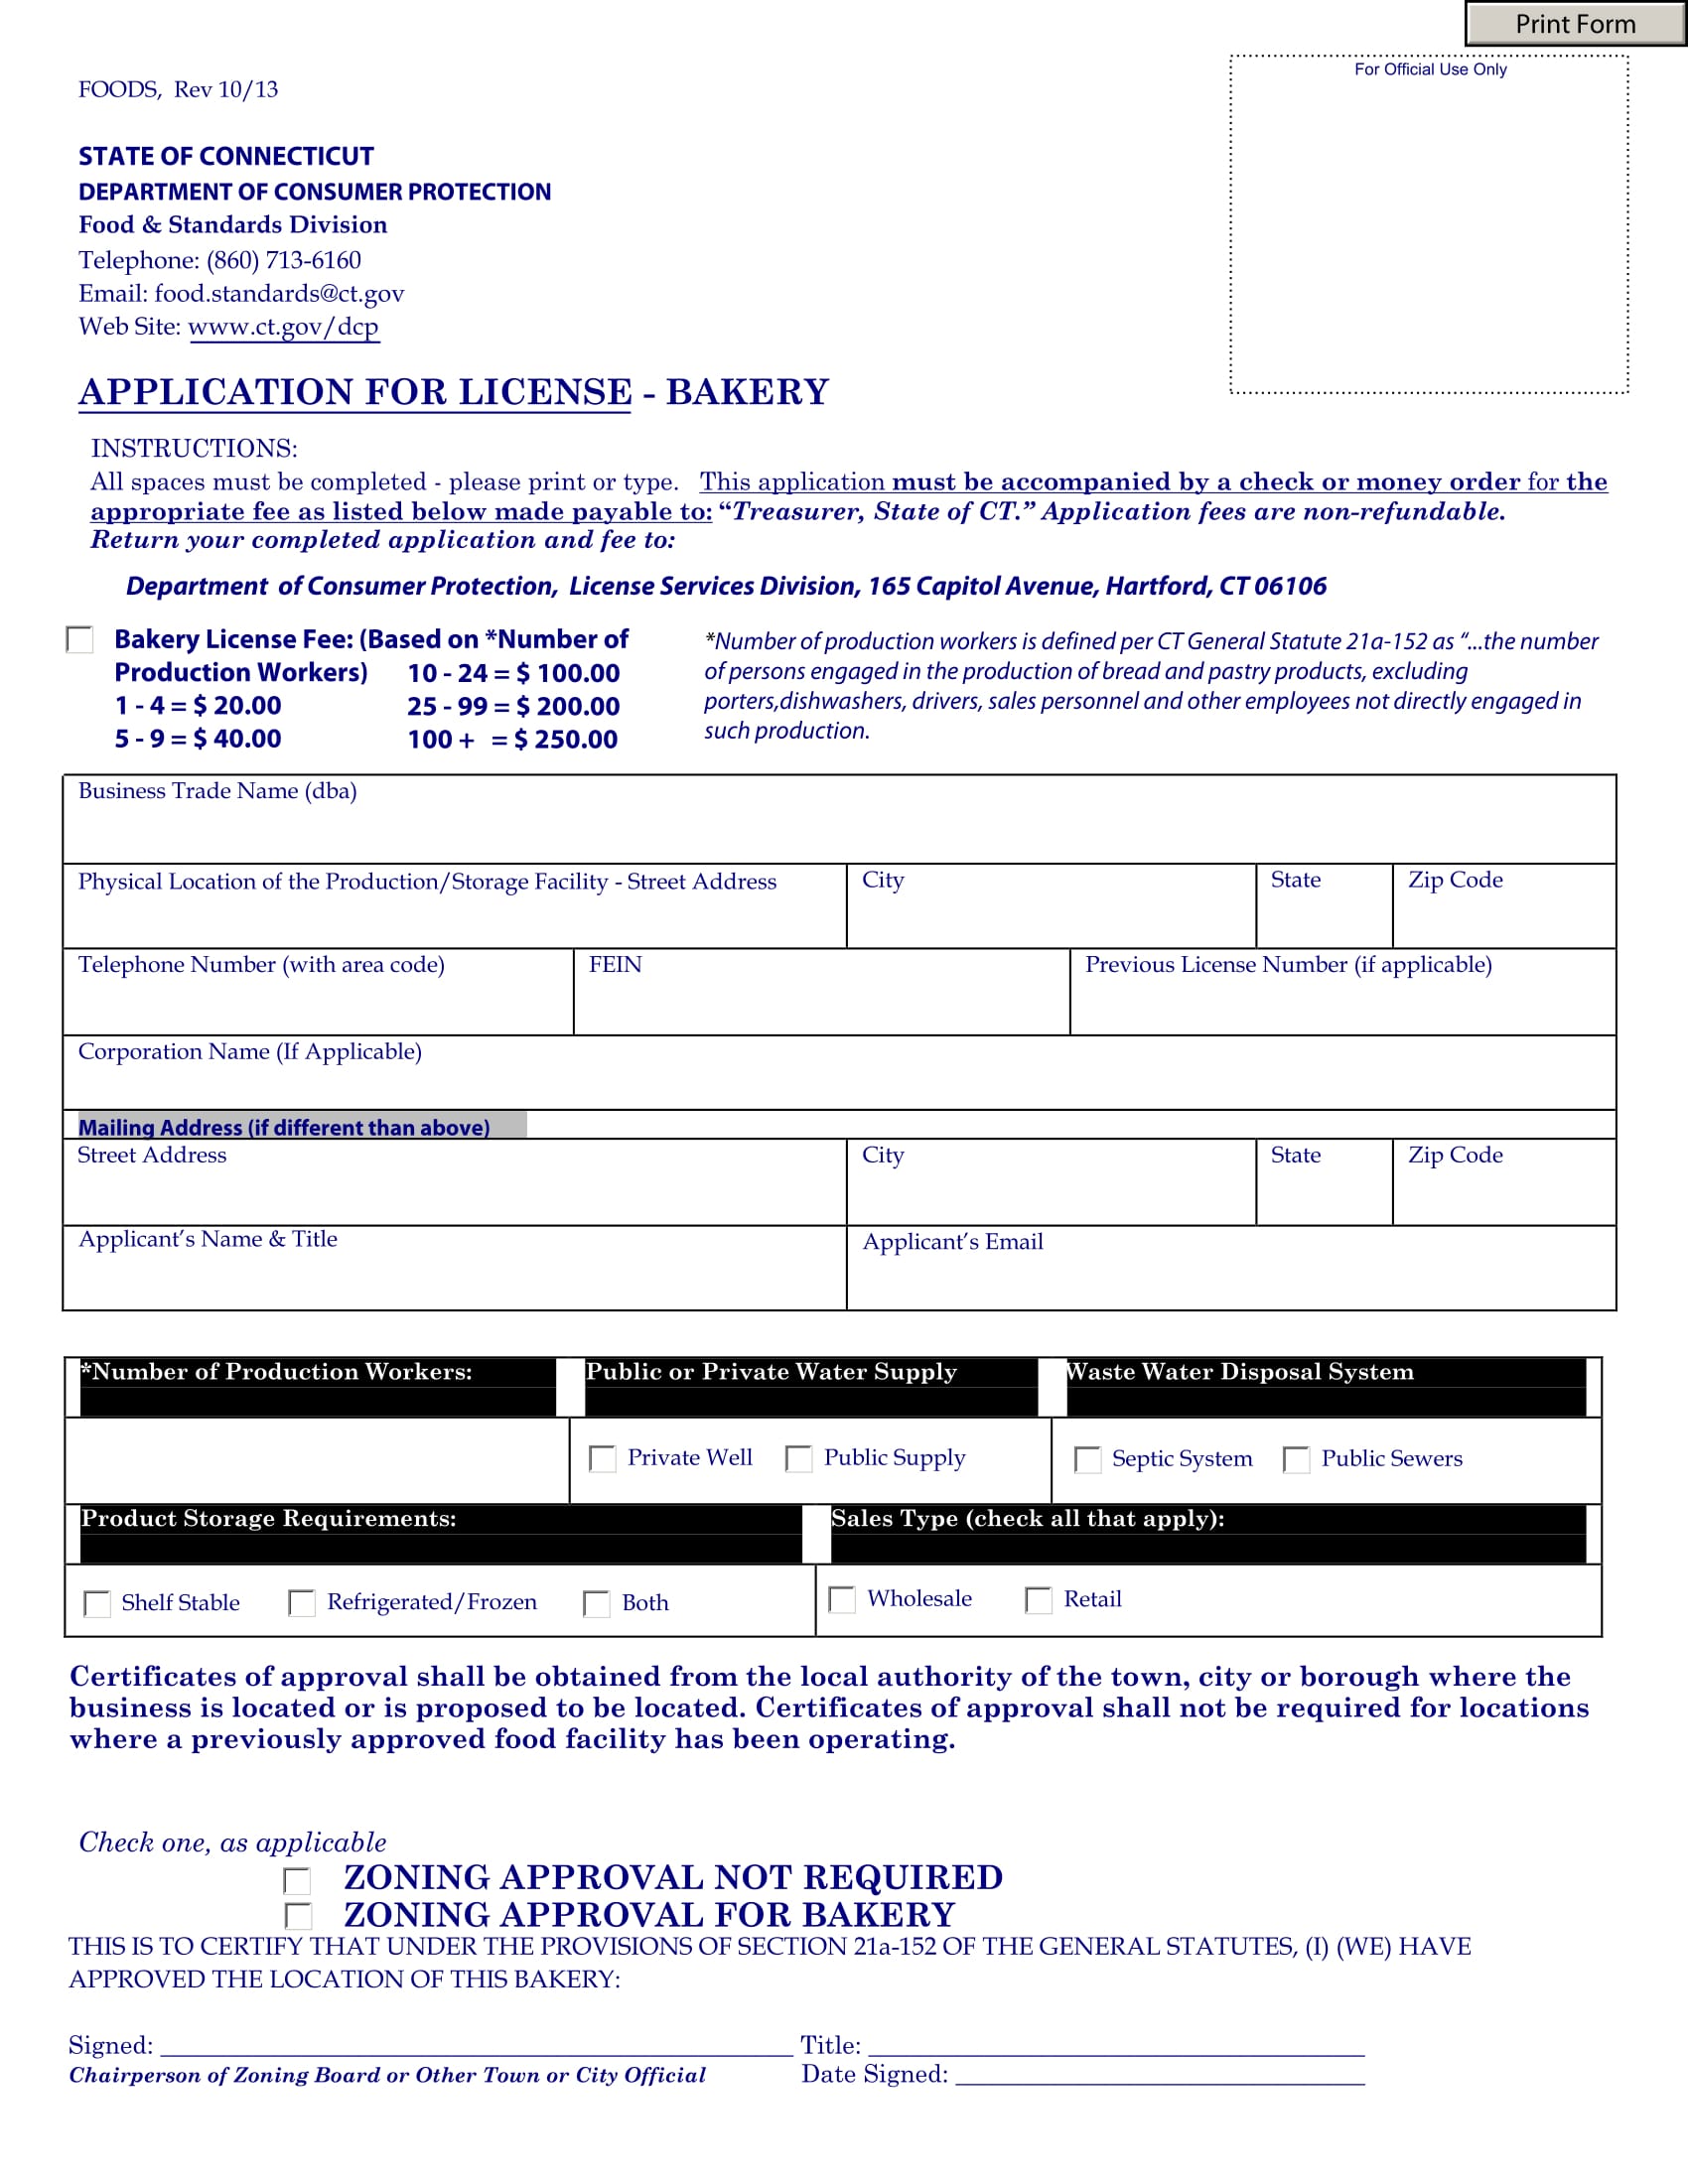 bakery license application 1